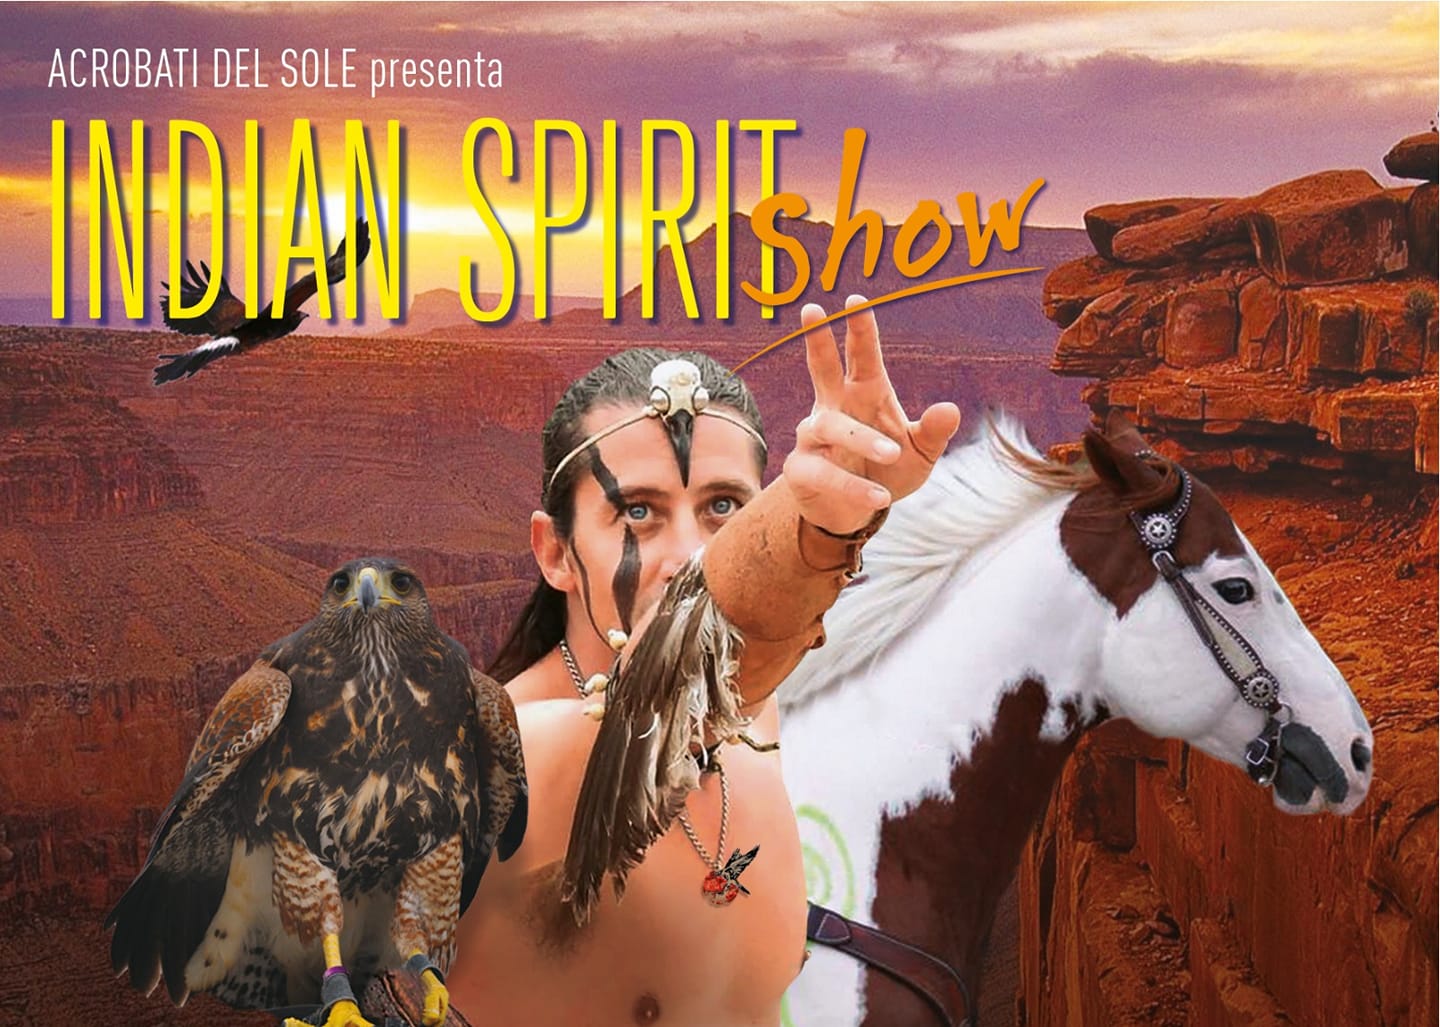 Indian Spirit show